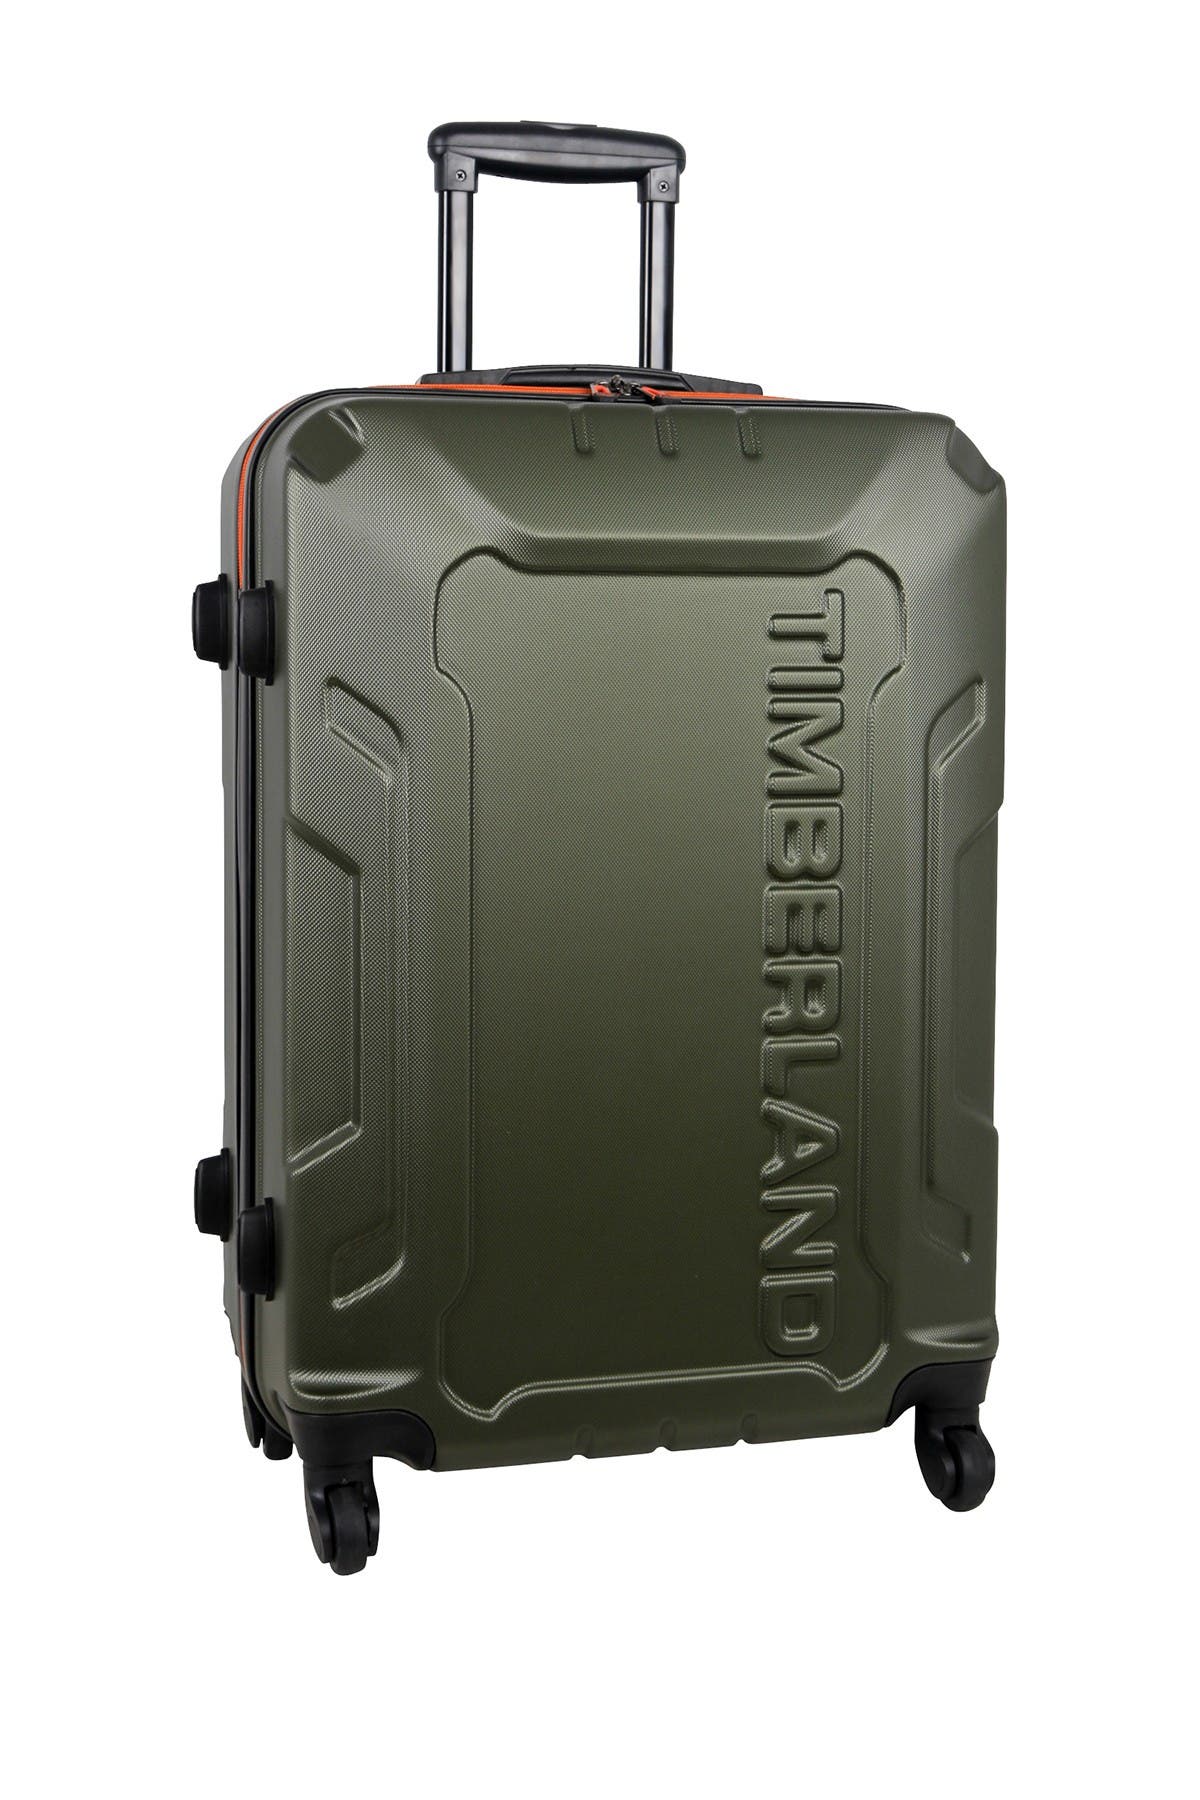 timberland hard suitcase